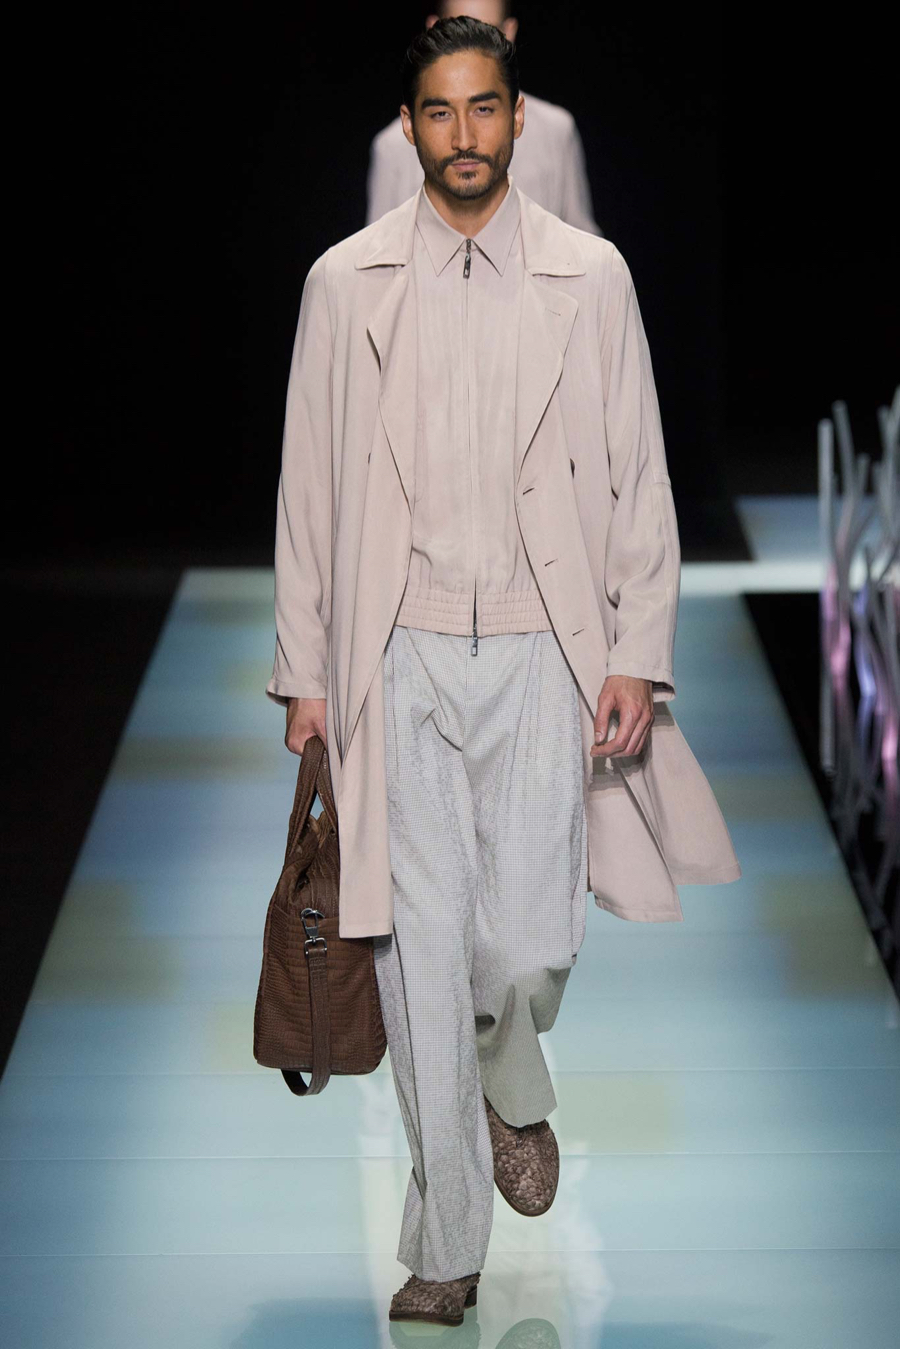 Giorgio Armani Spring Summer 2016 Menswear Collection Milan Fashion Week 016